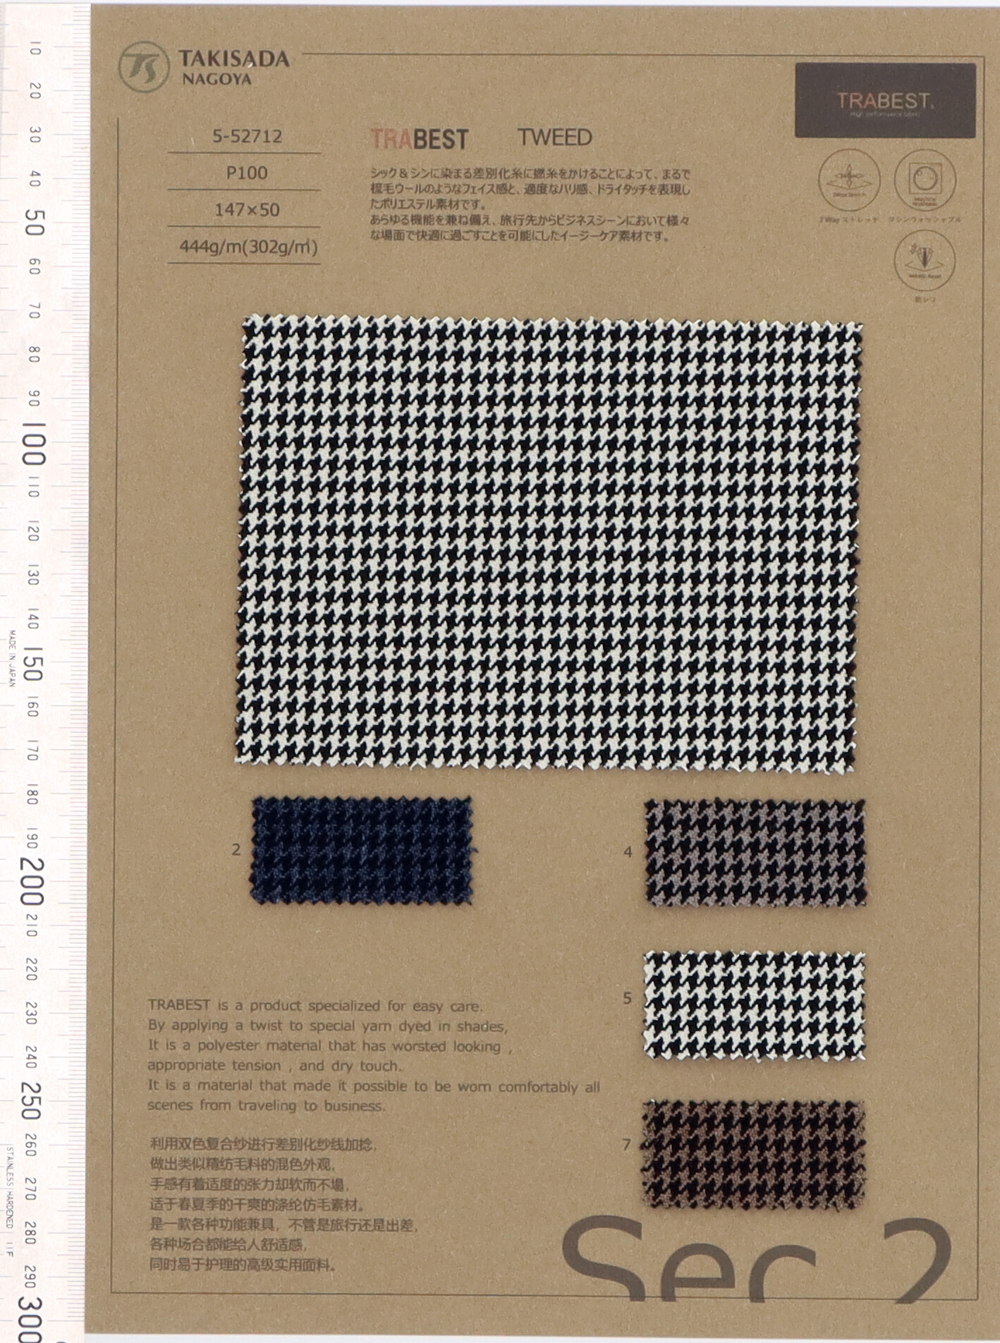 5-52712 TRABEST TWEED Soft Touch Melange Pied-de-poule[Fabrication De Textile] Takisada Nagoya